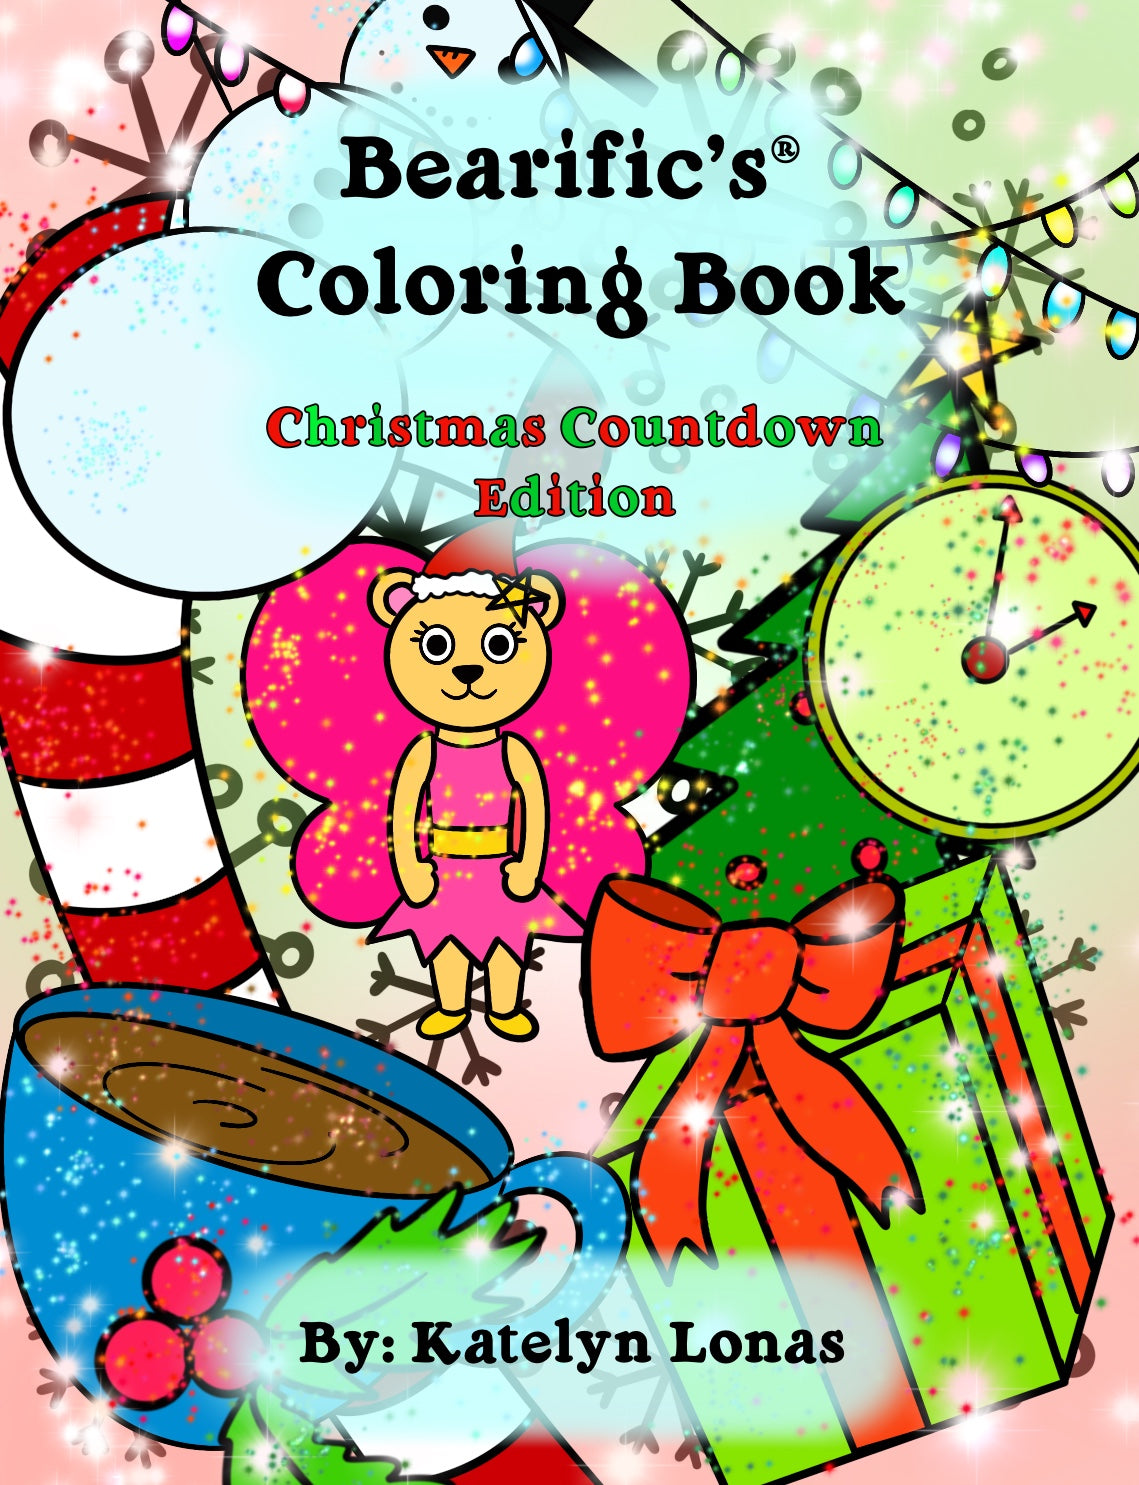 Bearific’s Coloring Book: Christmas Countdown Edition